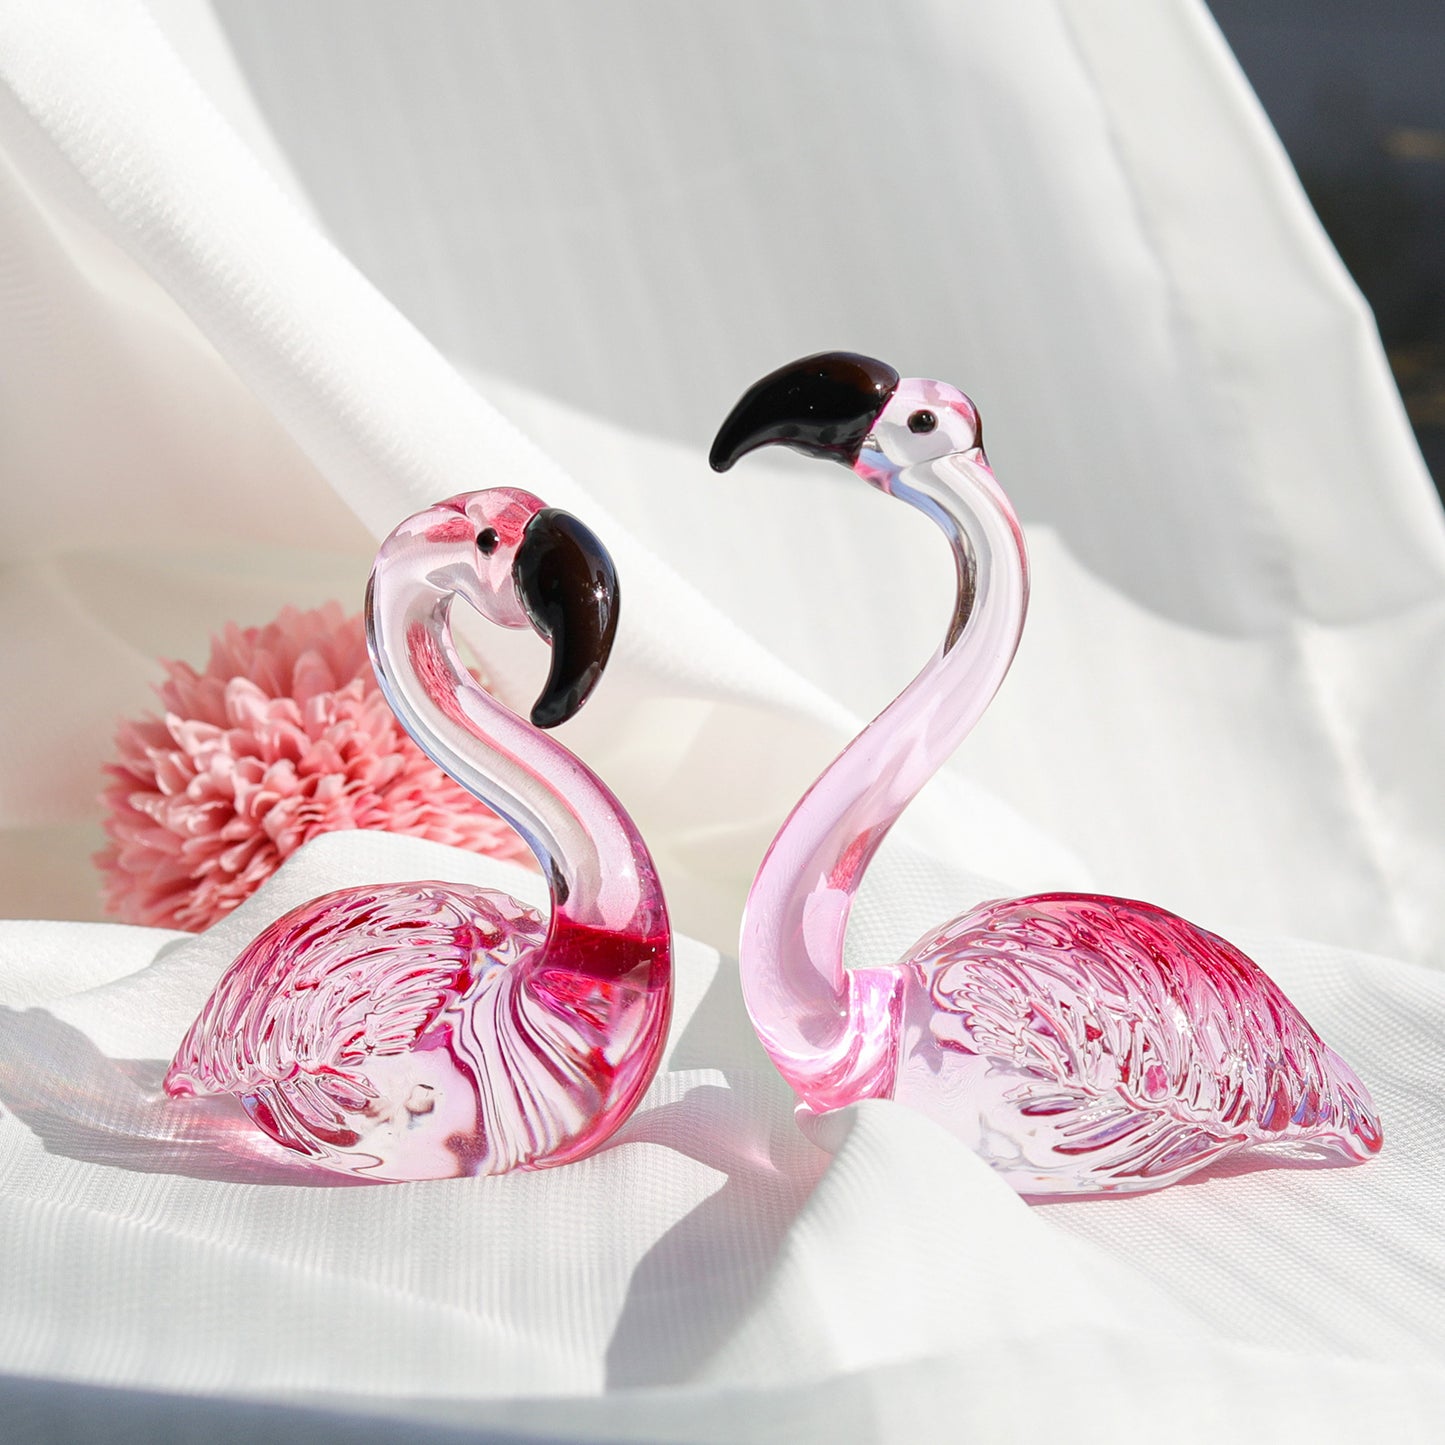 Crystal Flamingo Figurine Paperweight (1 Pair)